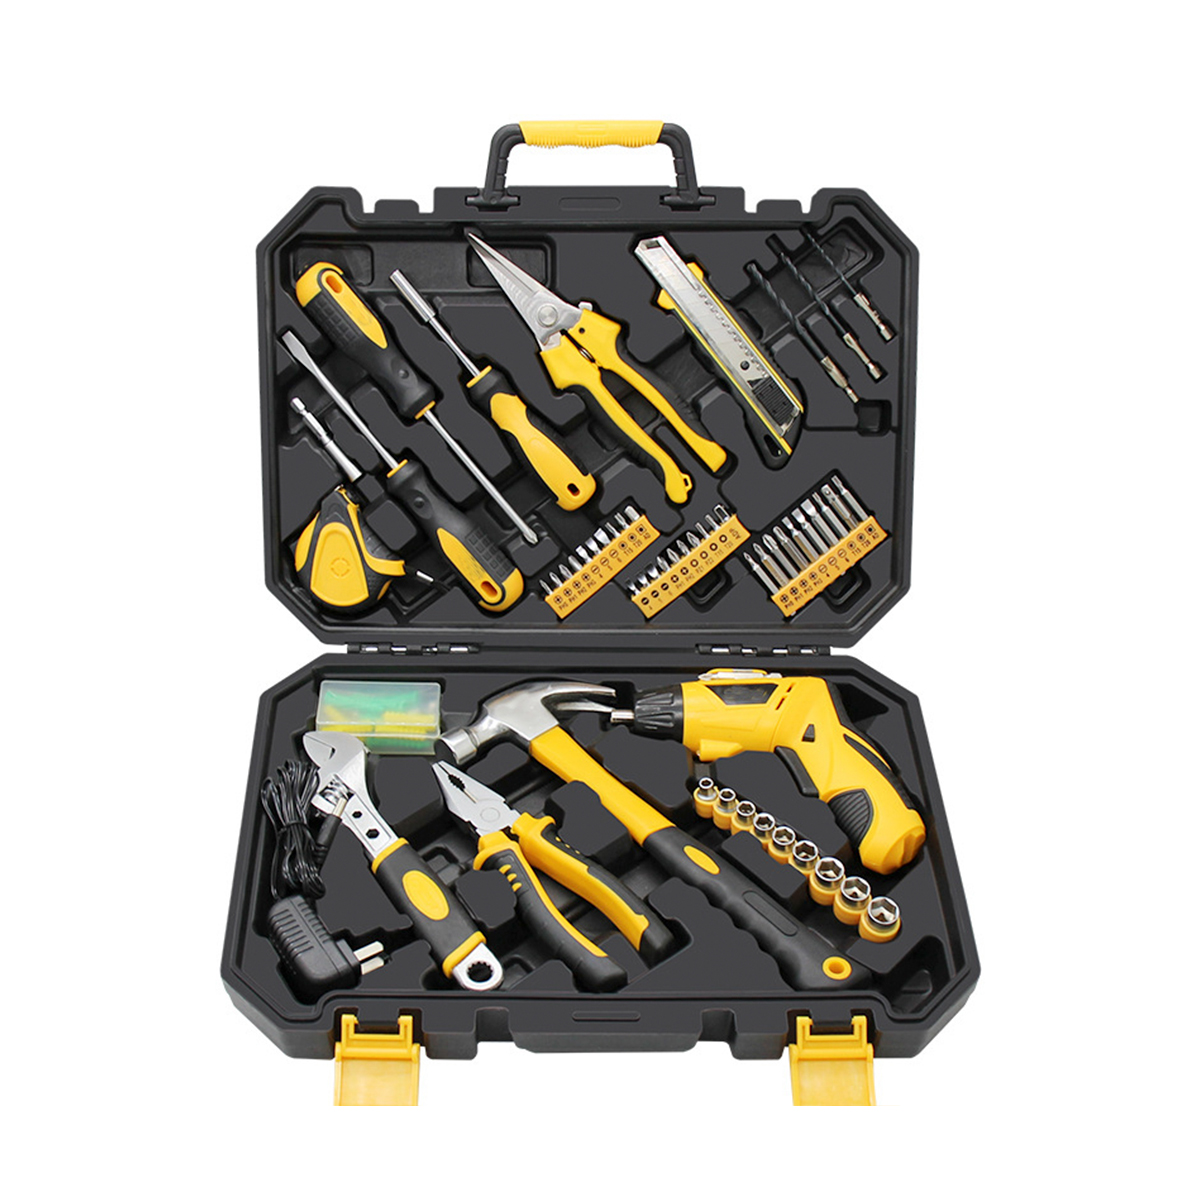 95pcs deducto Manu Tools Box Set Home Household Tool Kit